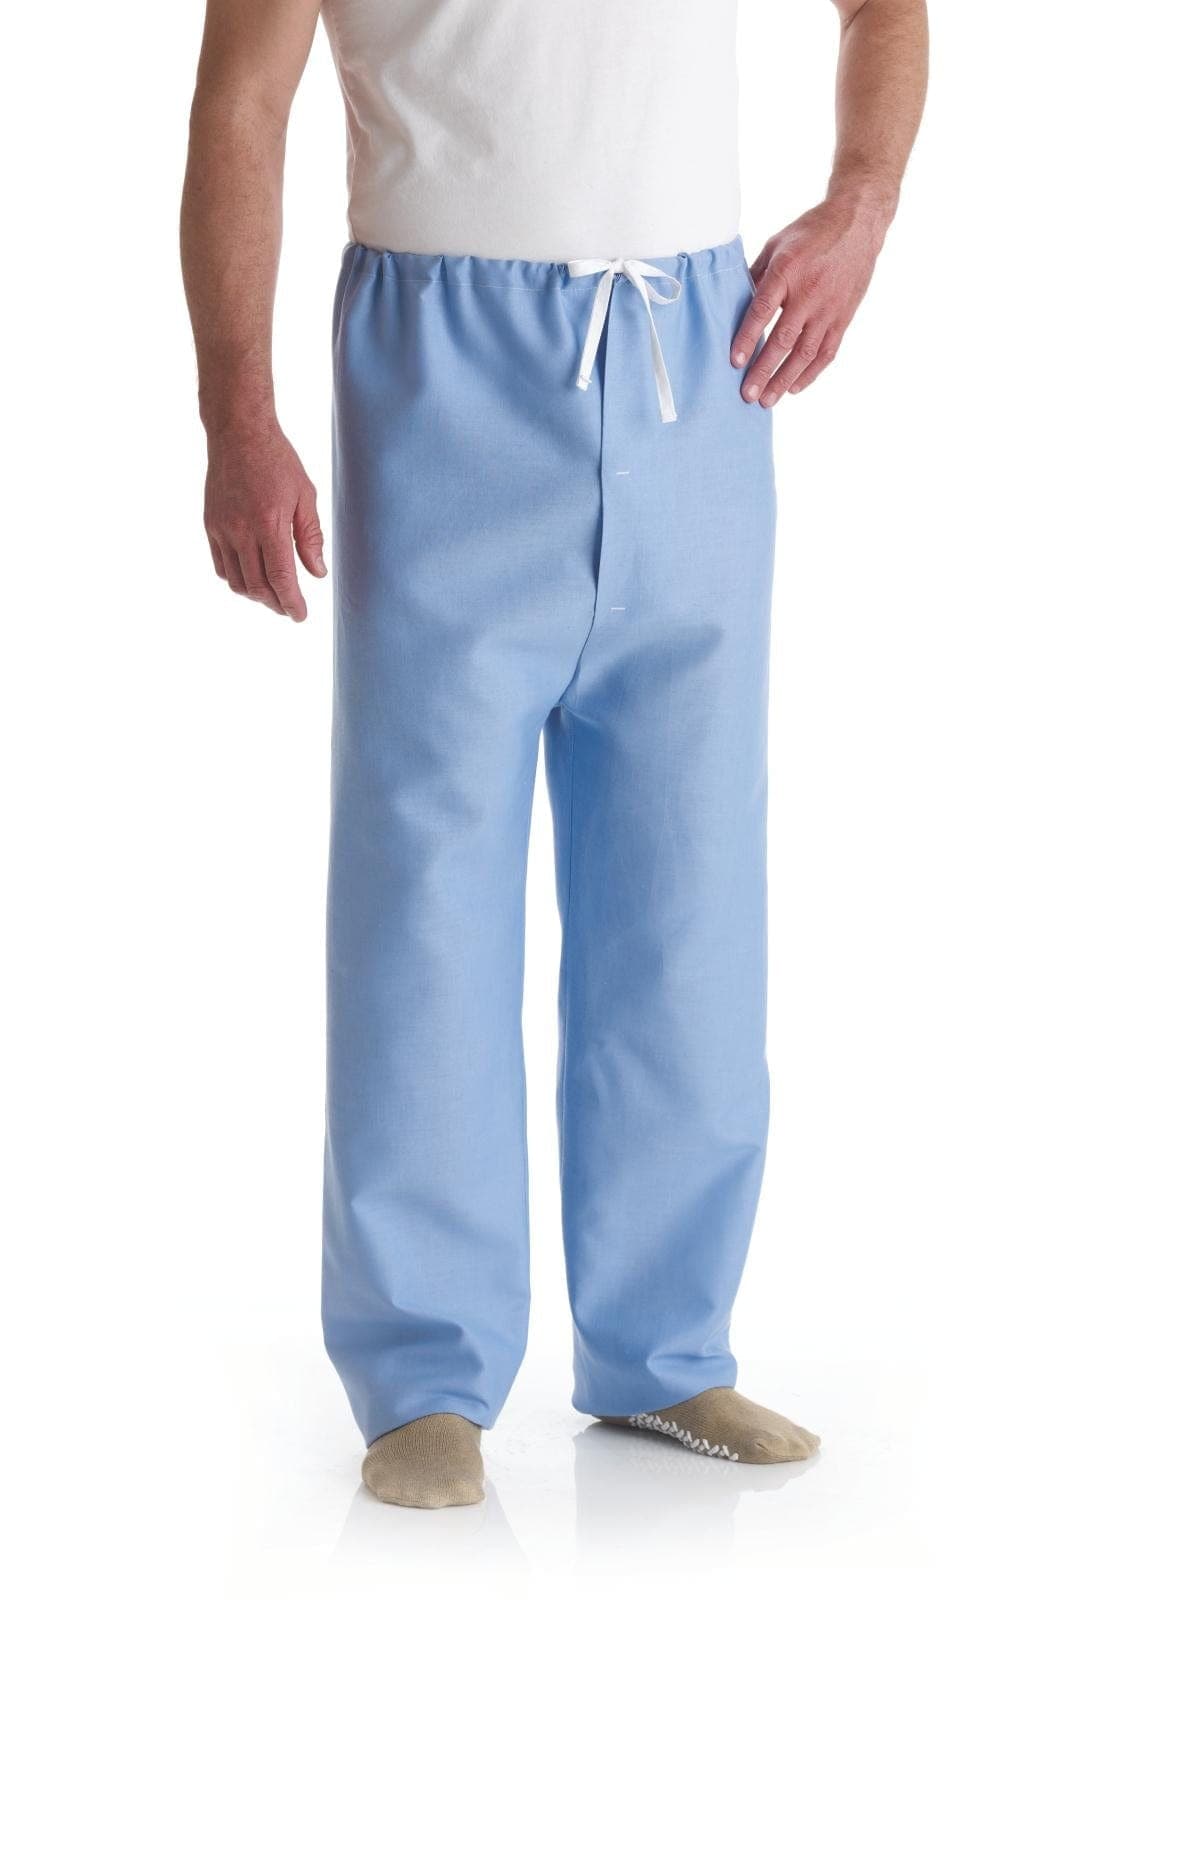 Medline Medline Patient Pajamas